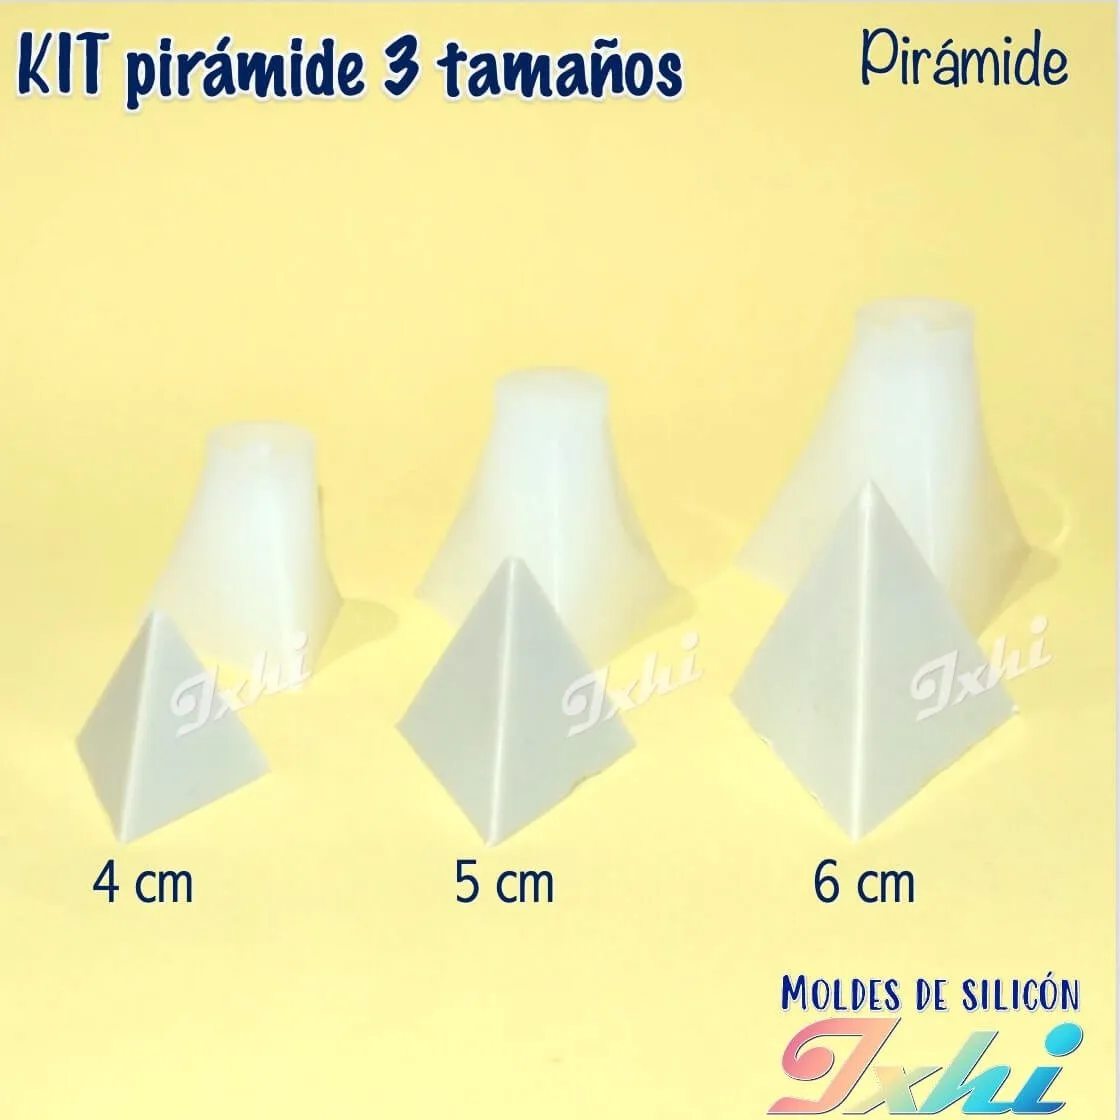 KIT pirámide 3 tamaños (3 moldes) - Moldes de Silicón Ixhi